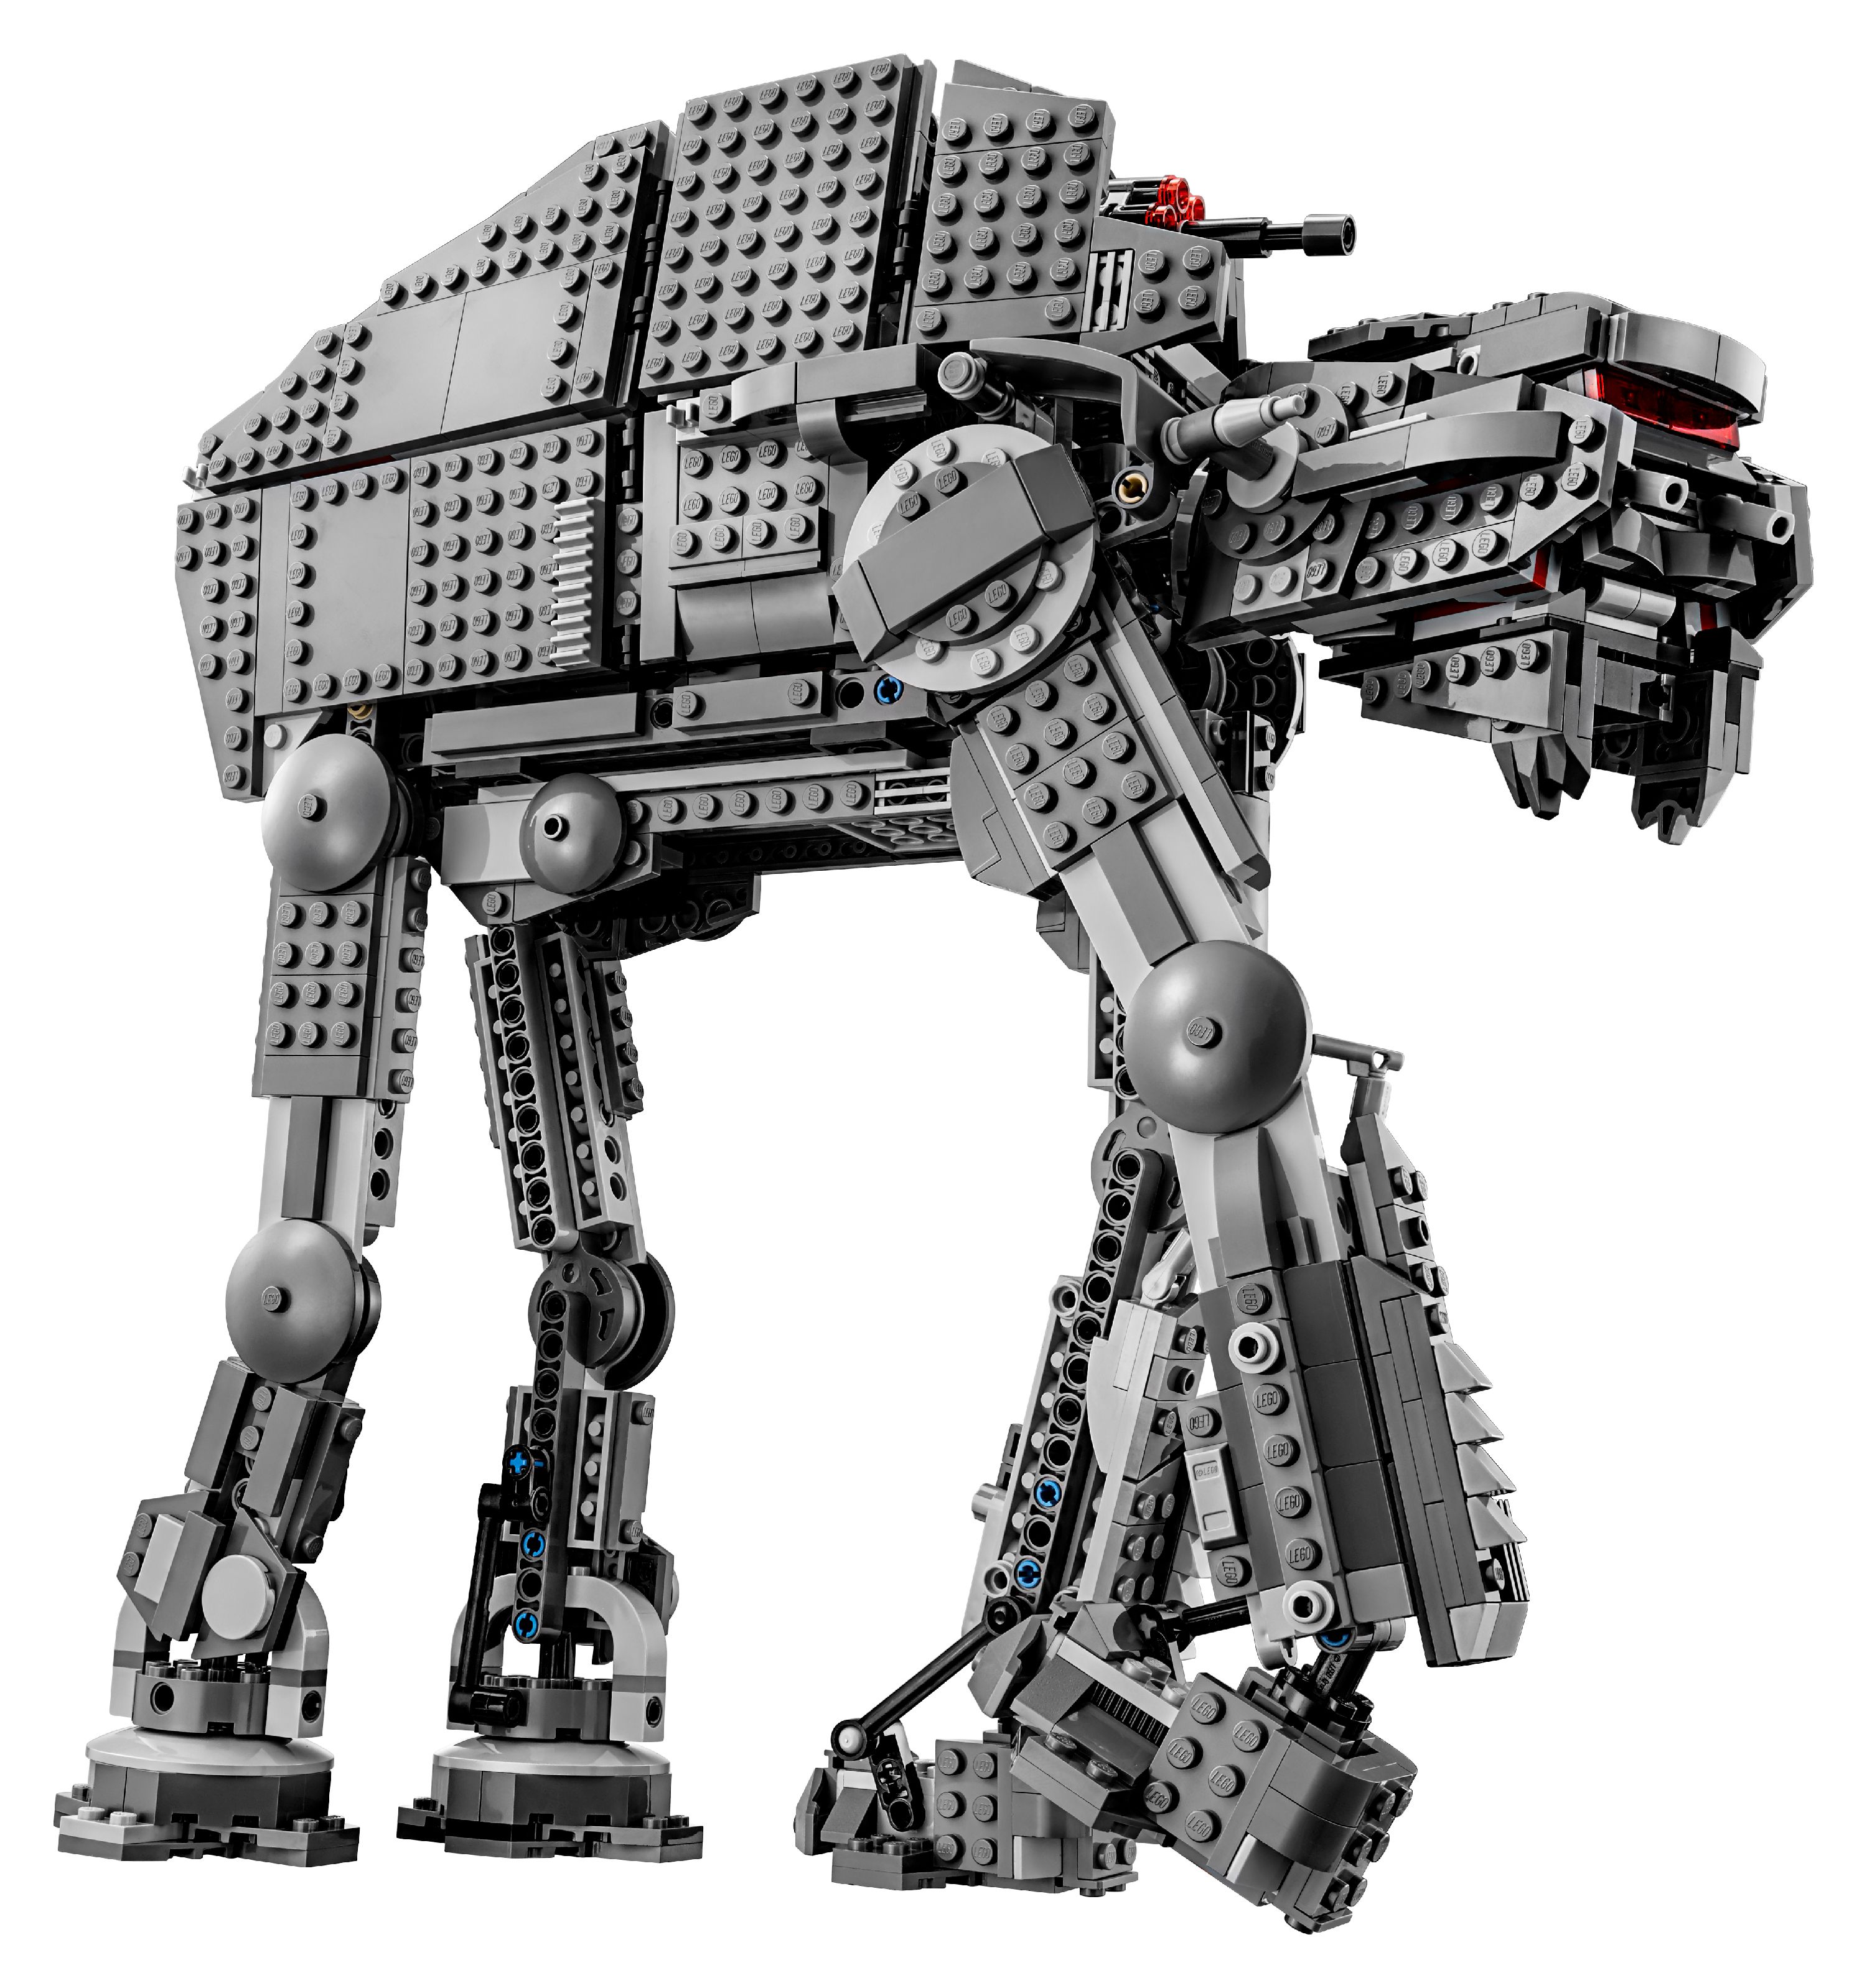 LEGO Star Wars First Order Heavy Assault Walker 75189 - image 5 of 6